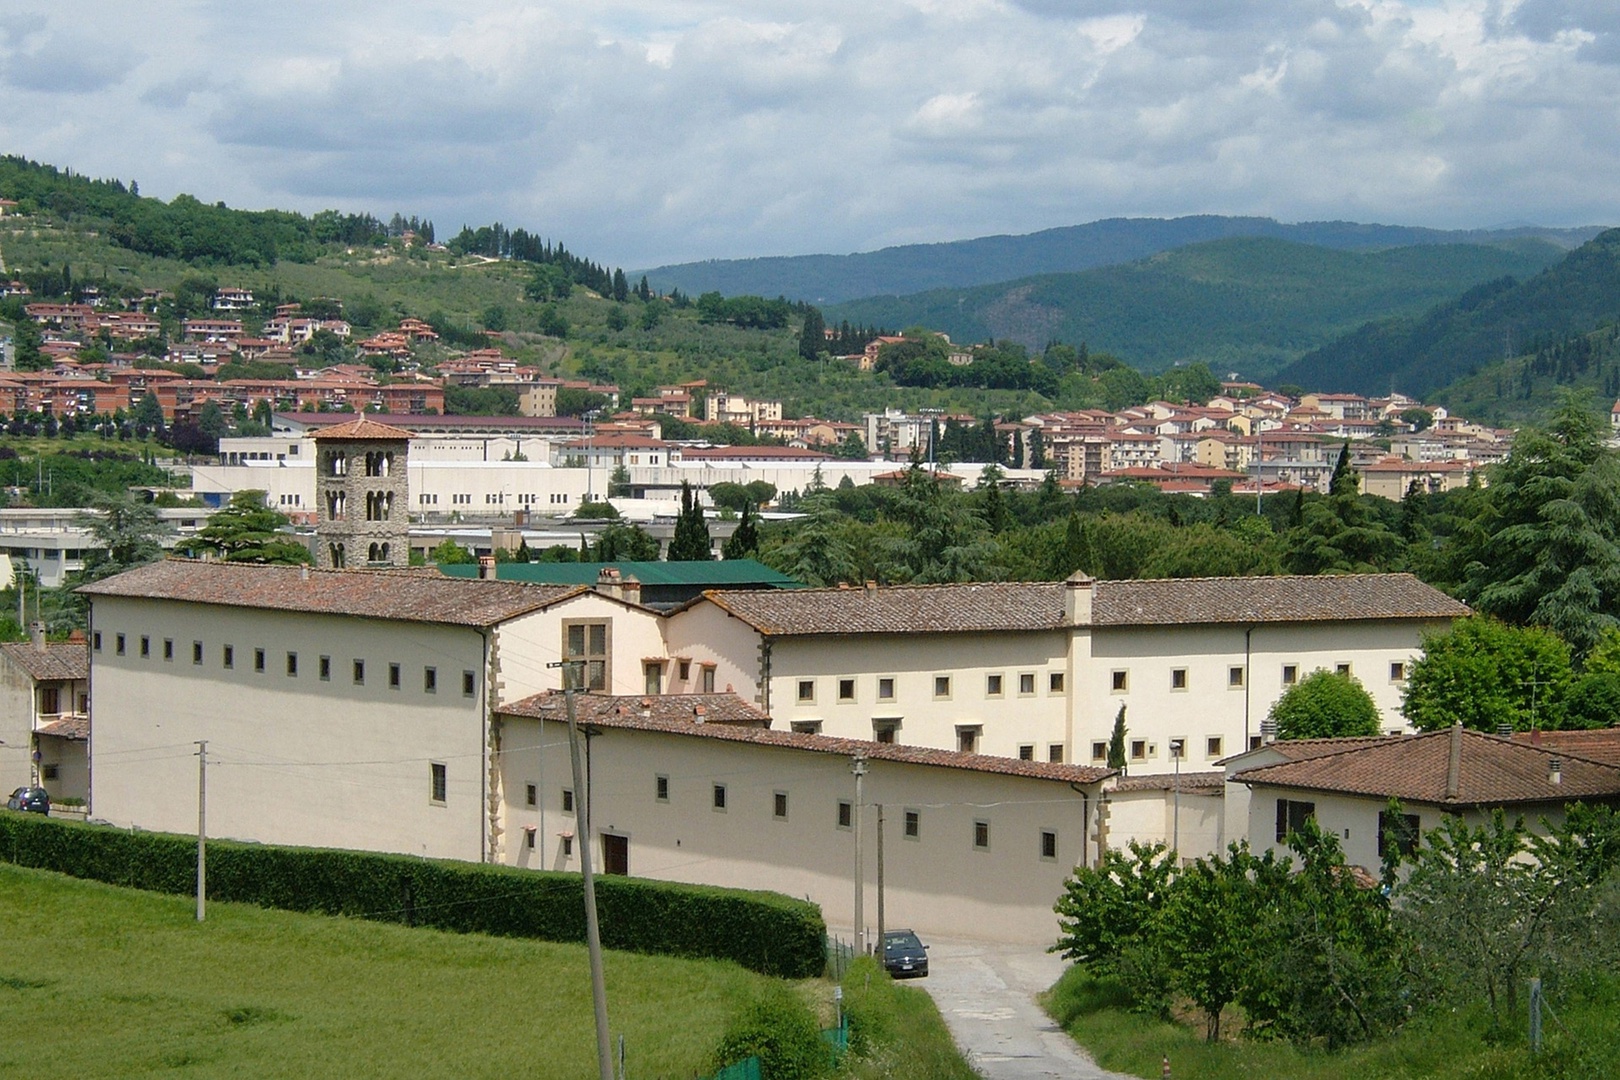 Monastery of Saint Mary of Rosano in nearby town of Rignano sull'Arno.